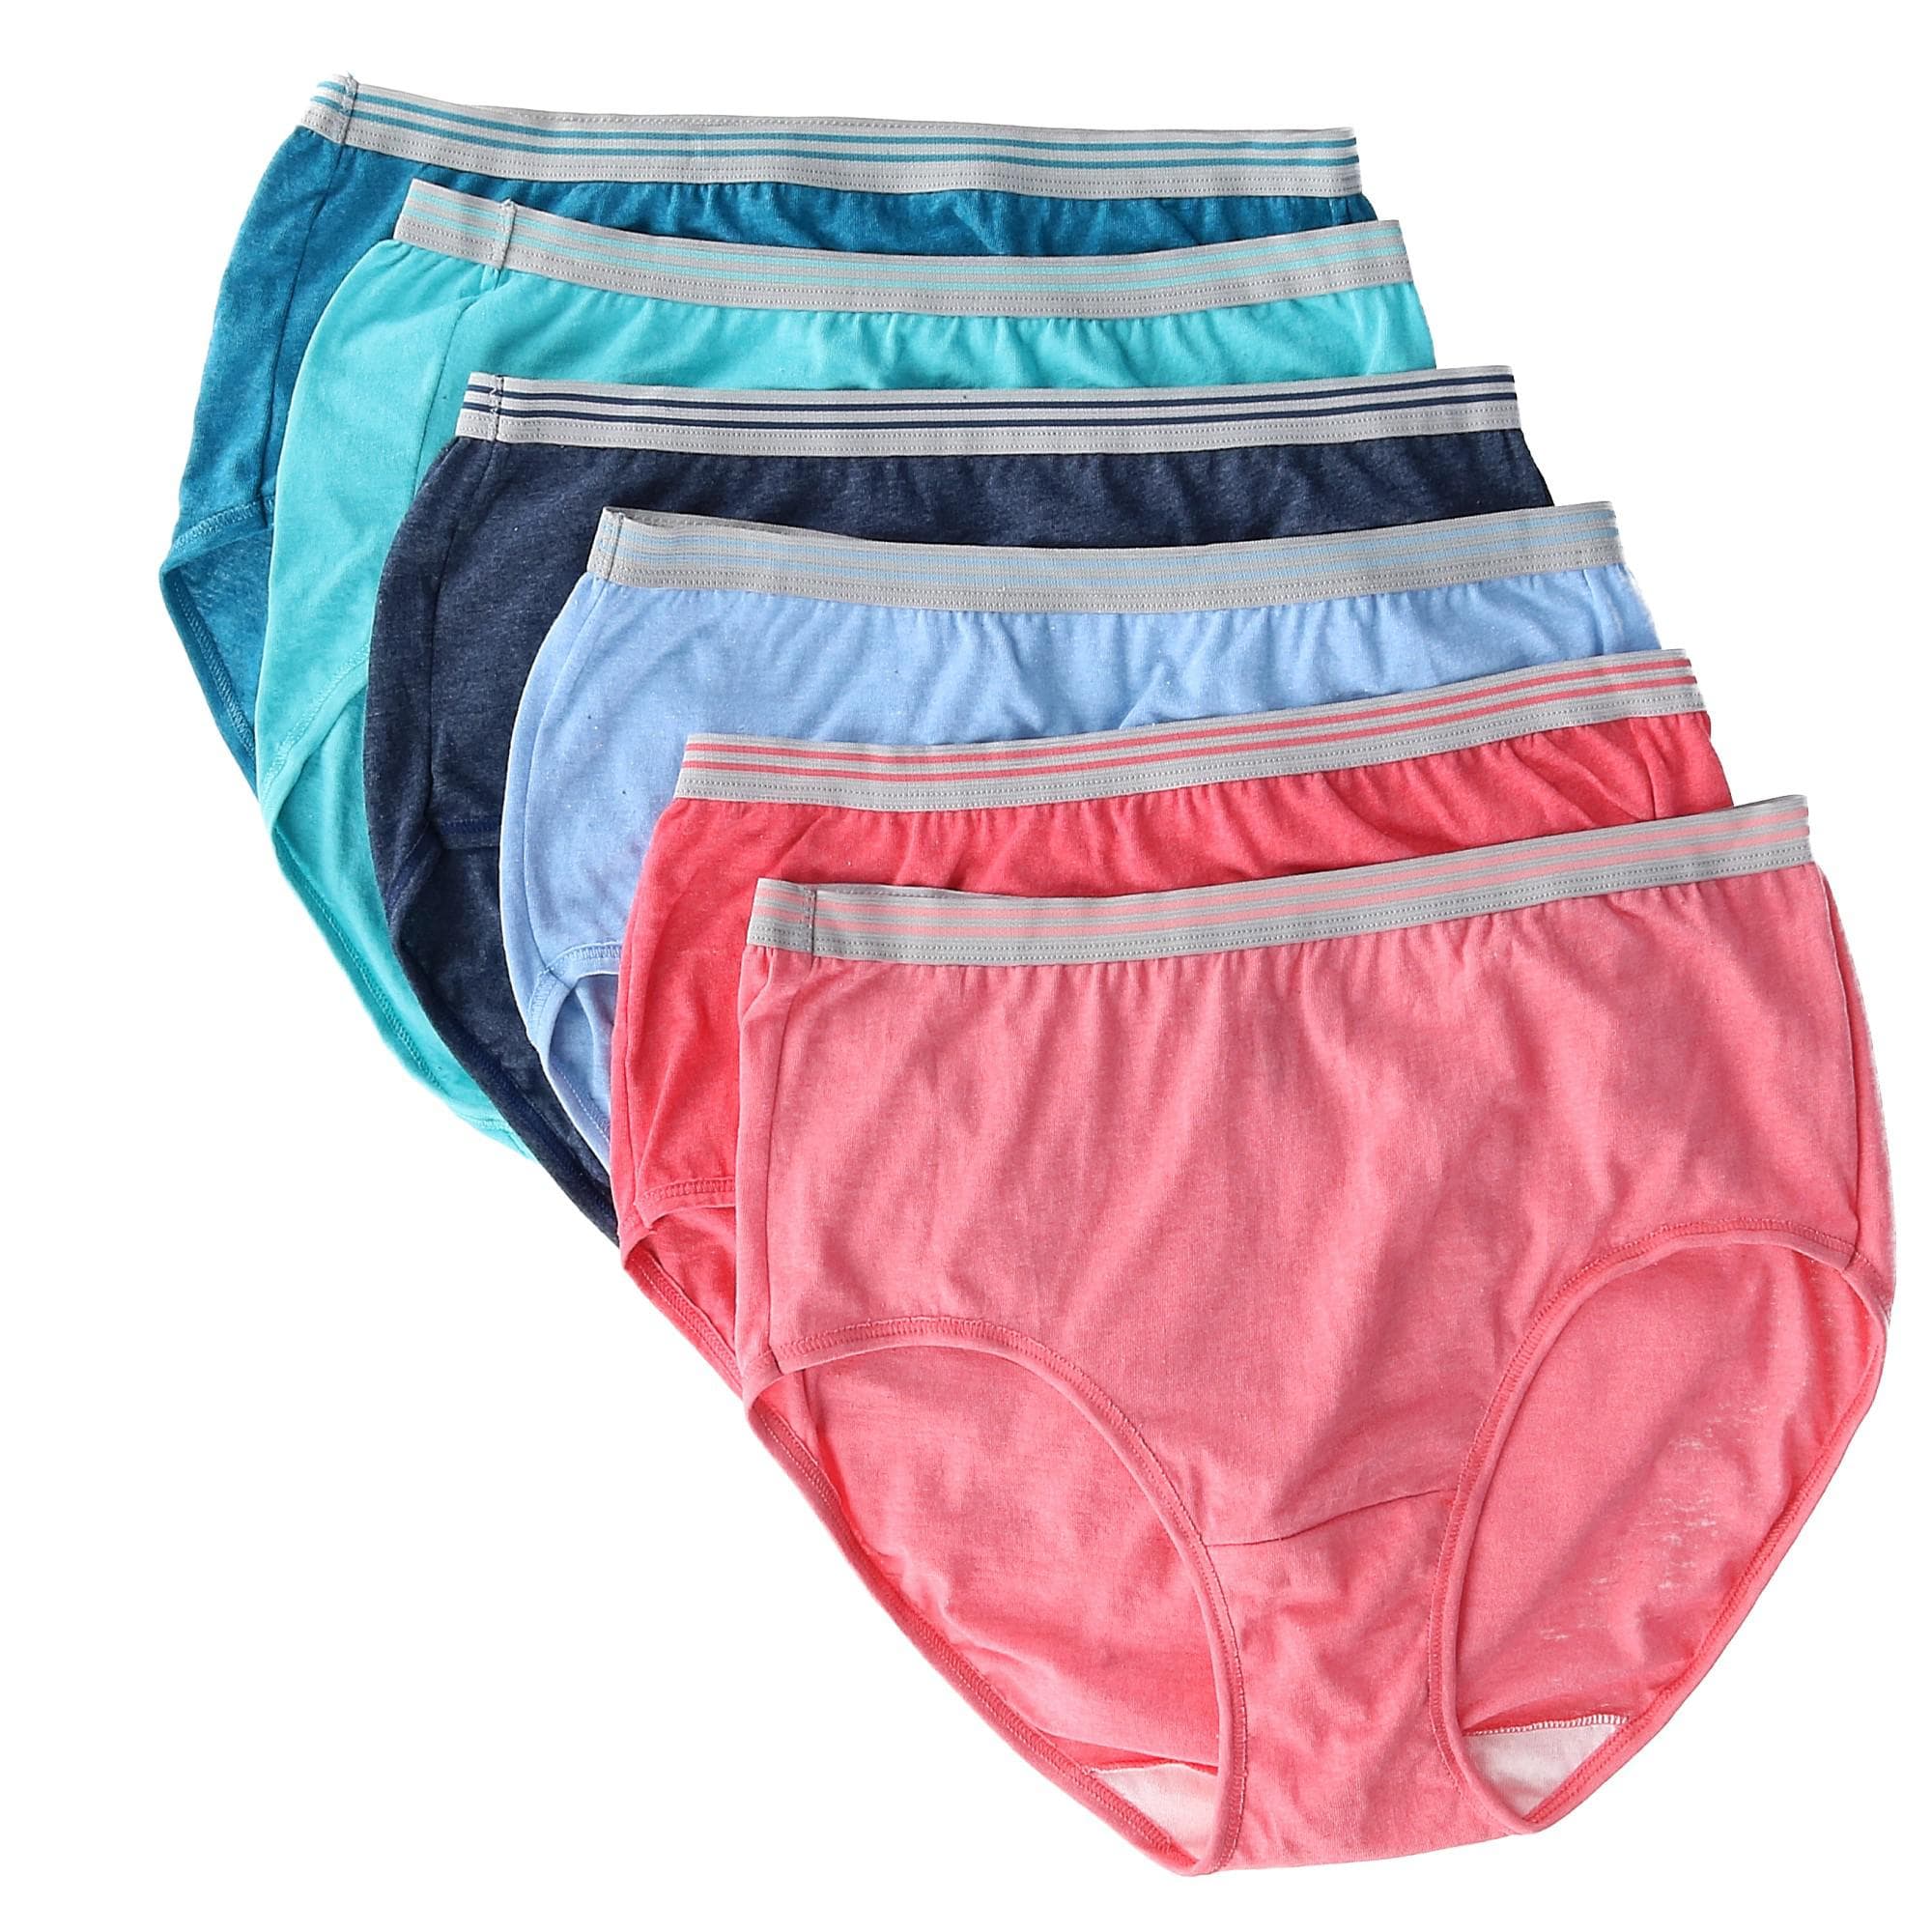 Fruit of the Loom Women's Heather Brief Underwear (6 Pair Pack) - 6 / Multi